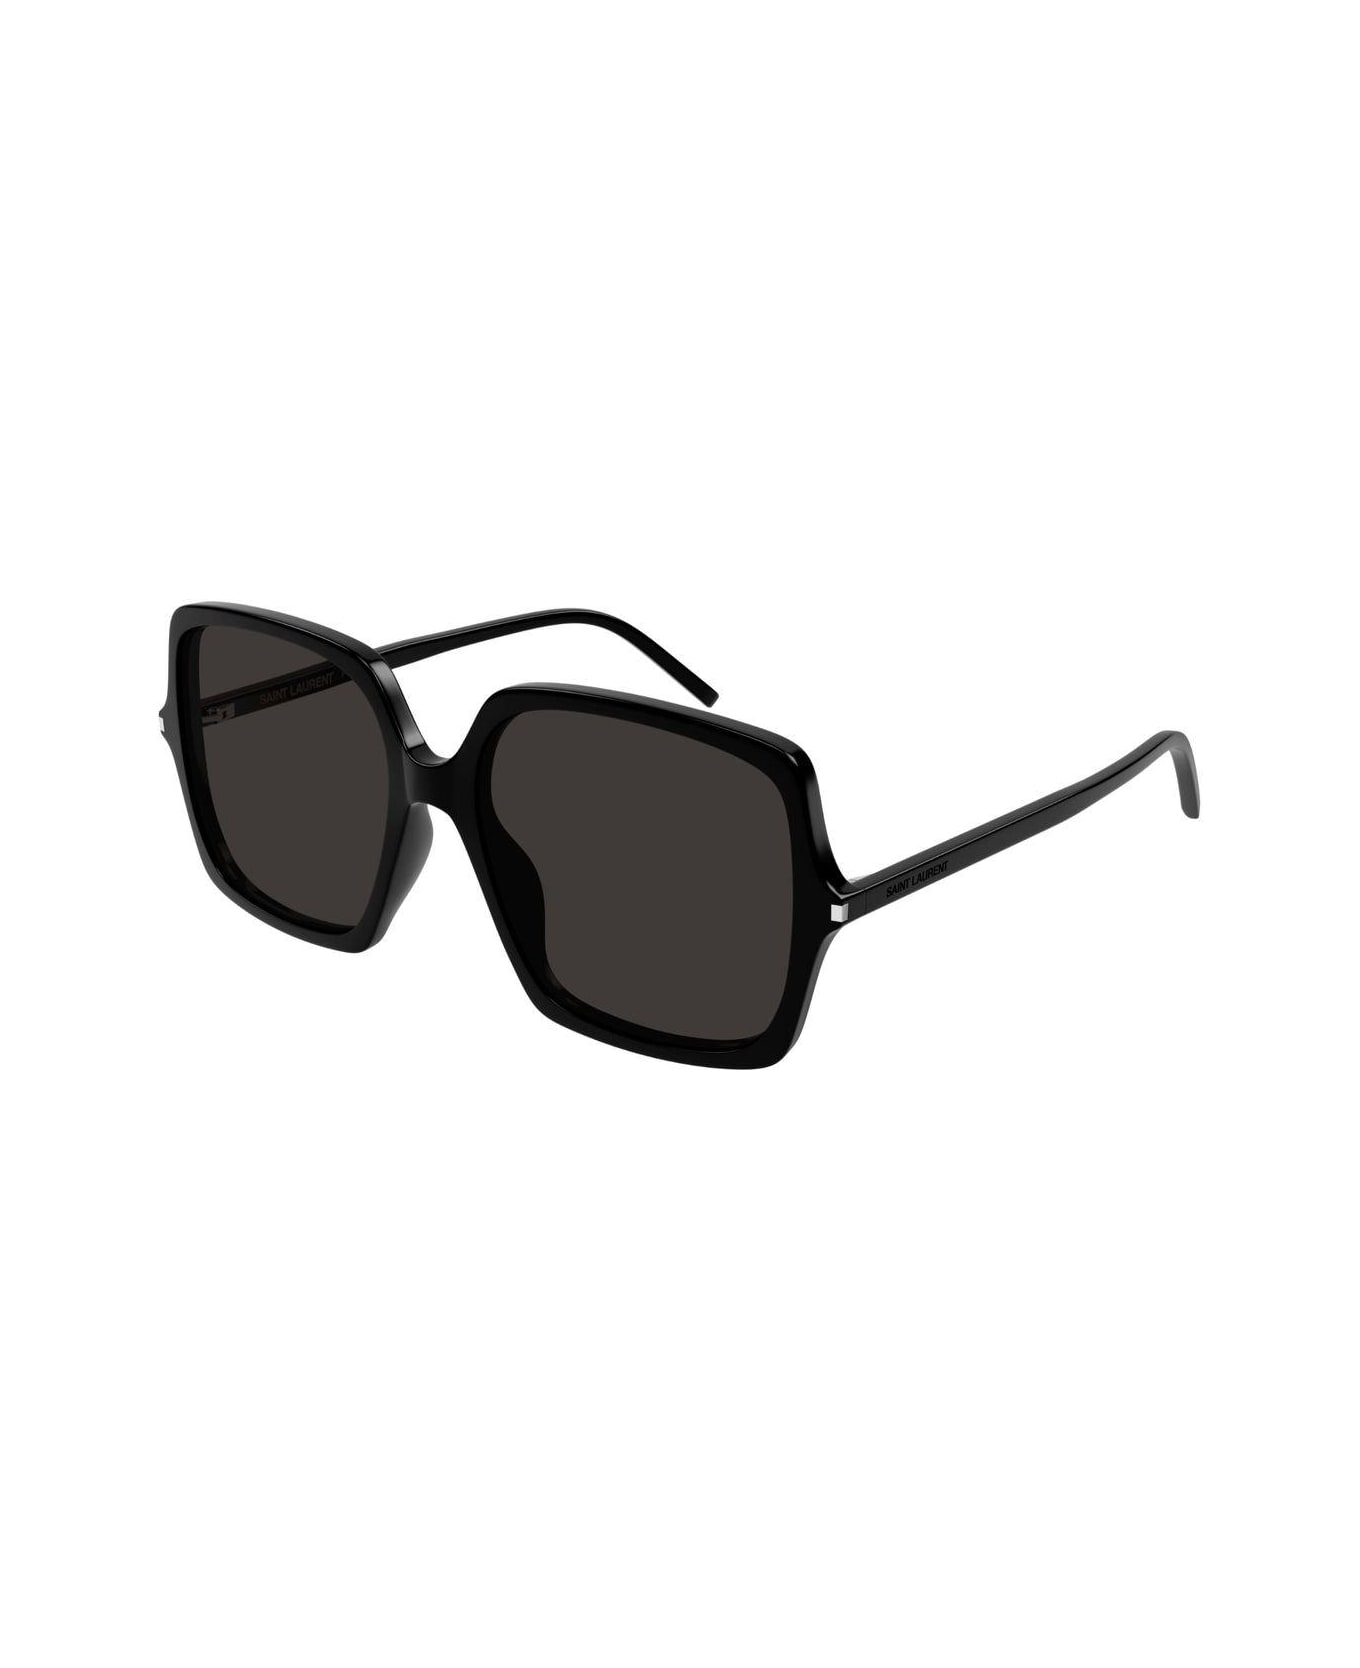 Saint Laurent Eyewear Square Frame Sunglasses Sunglasses - 001 BLACK BLACK BLACK